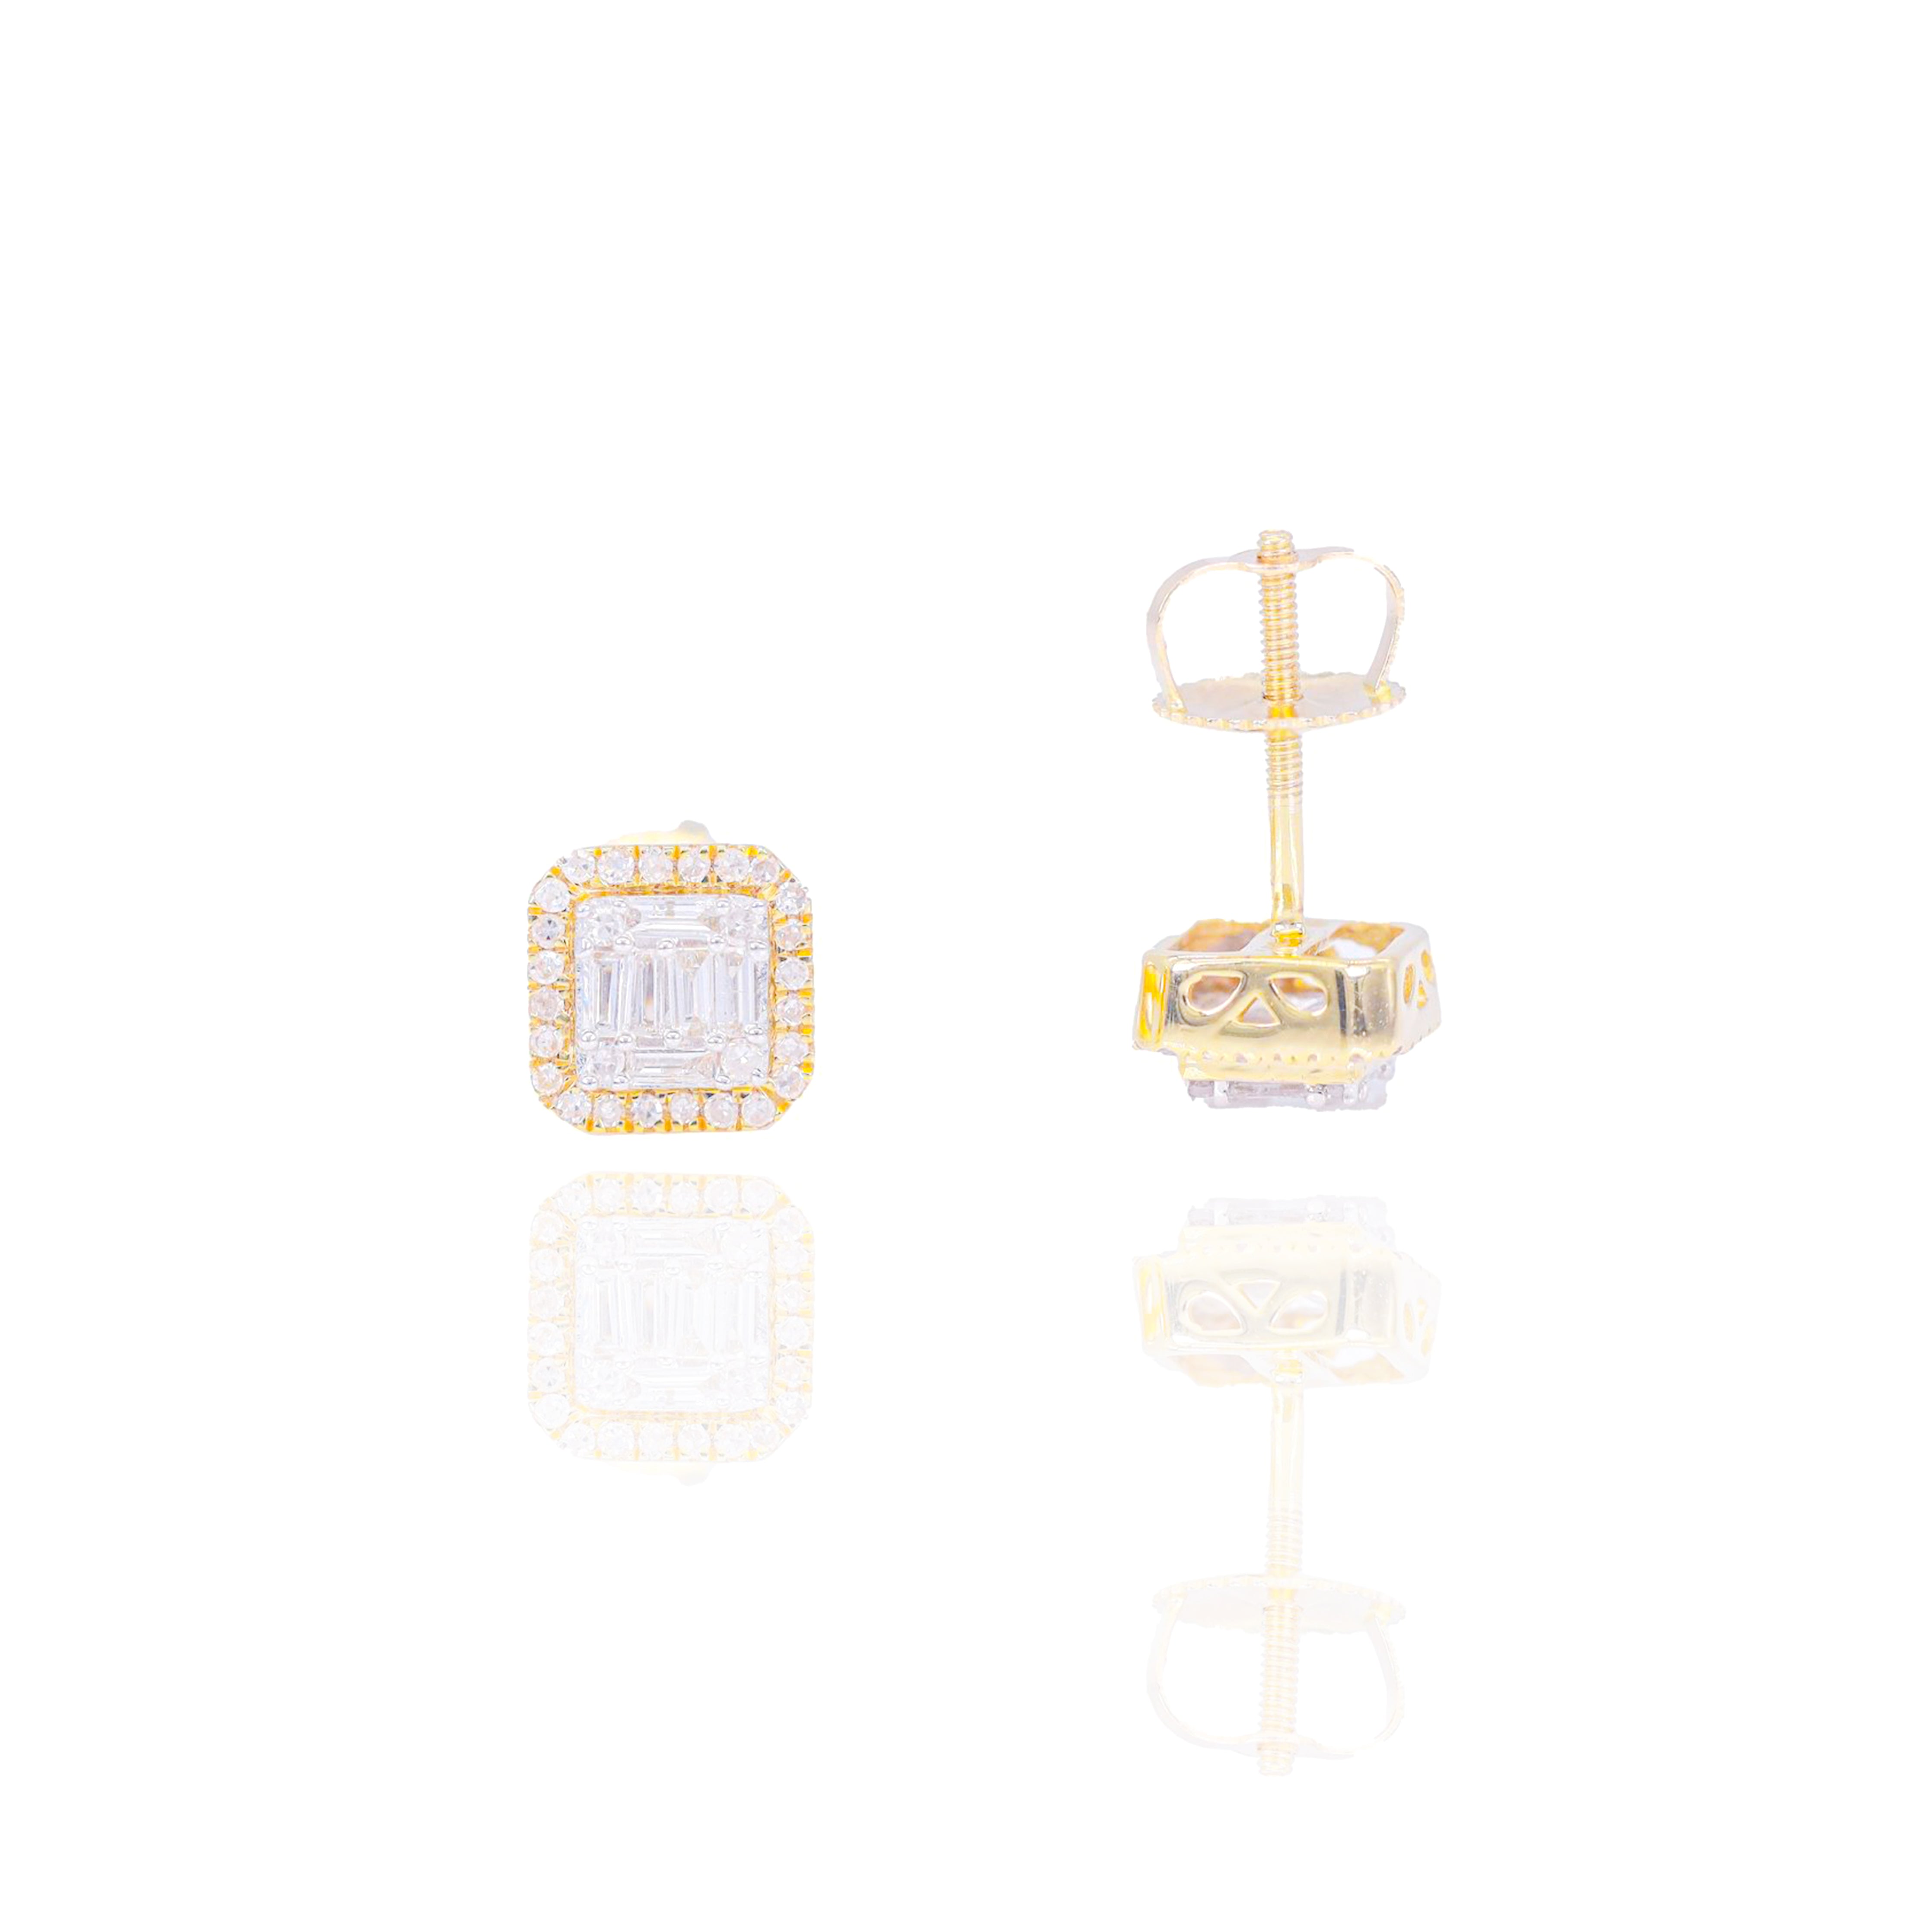 Two-Tone Square Baguette Diamond Cluster Earrings